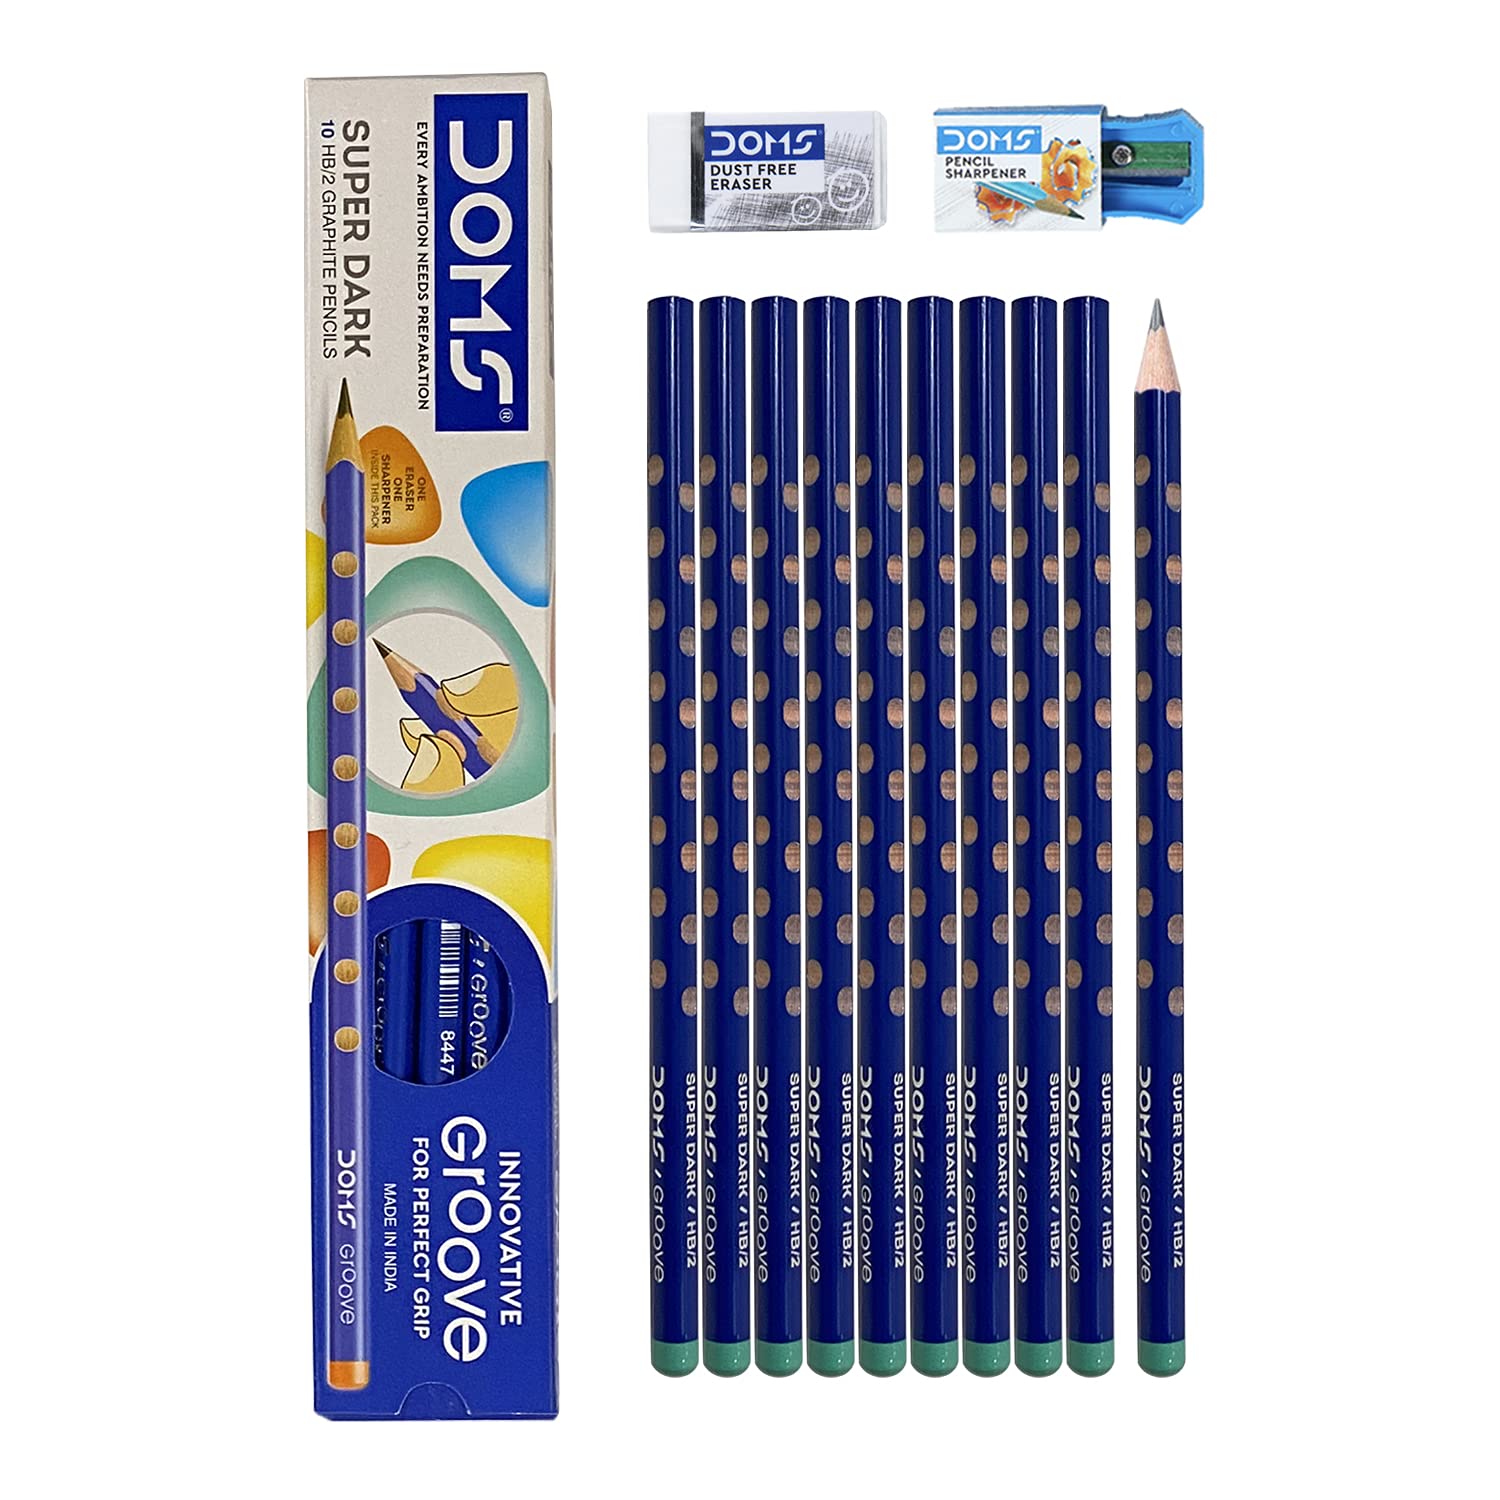 Doms Groove Super Dark HB/2 Graphite Pencils (Pack of 10)